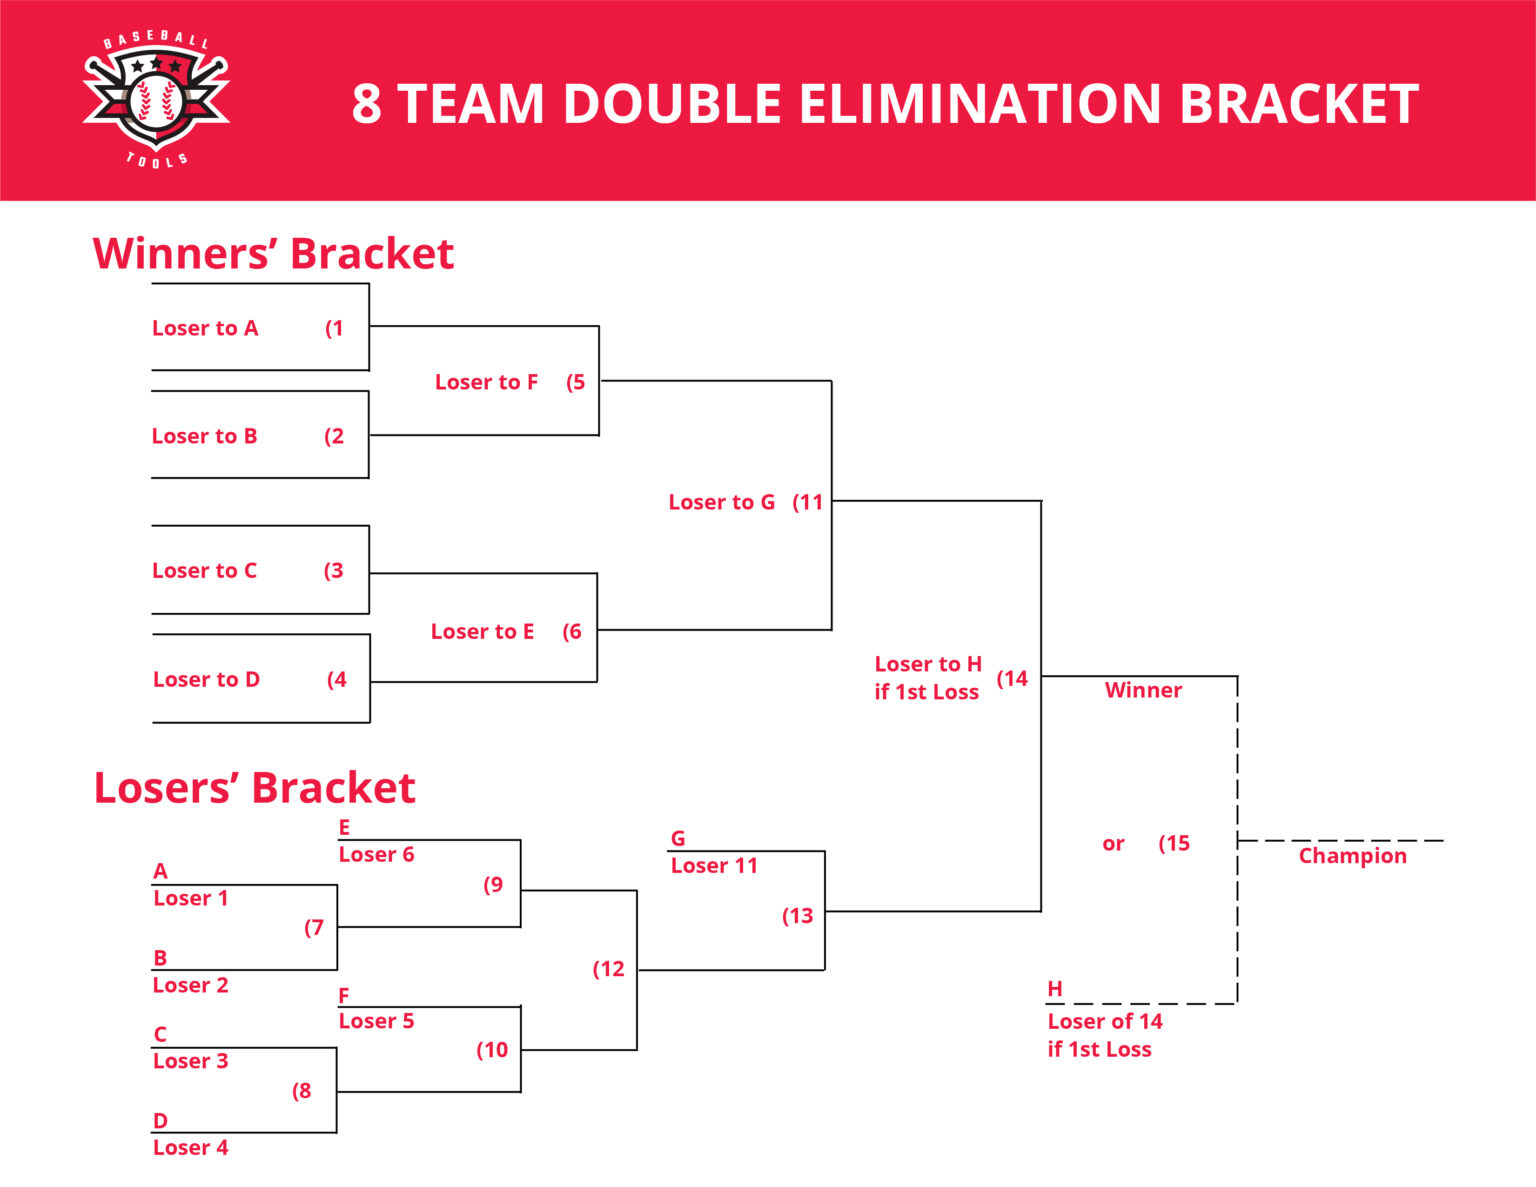 8 Team Double Elimination Bracket Baseball tools